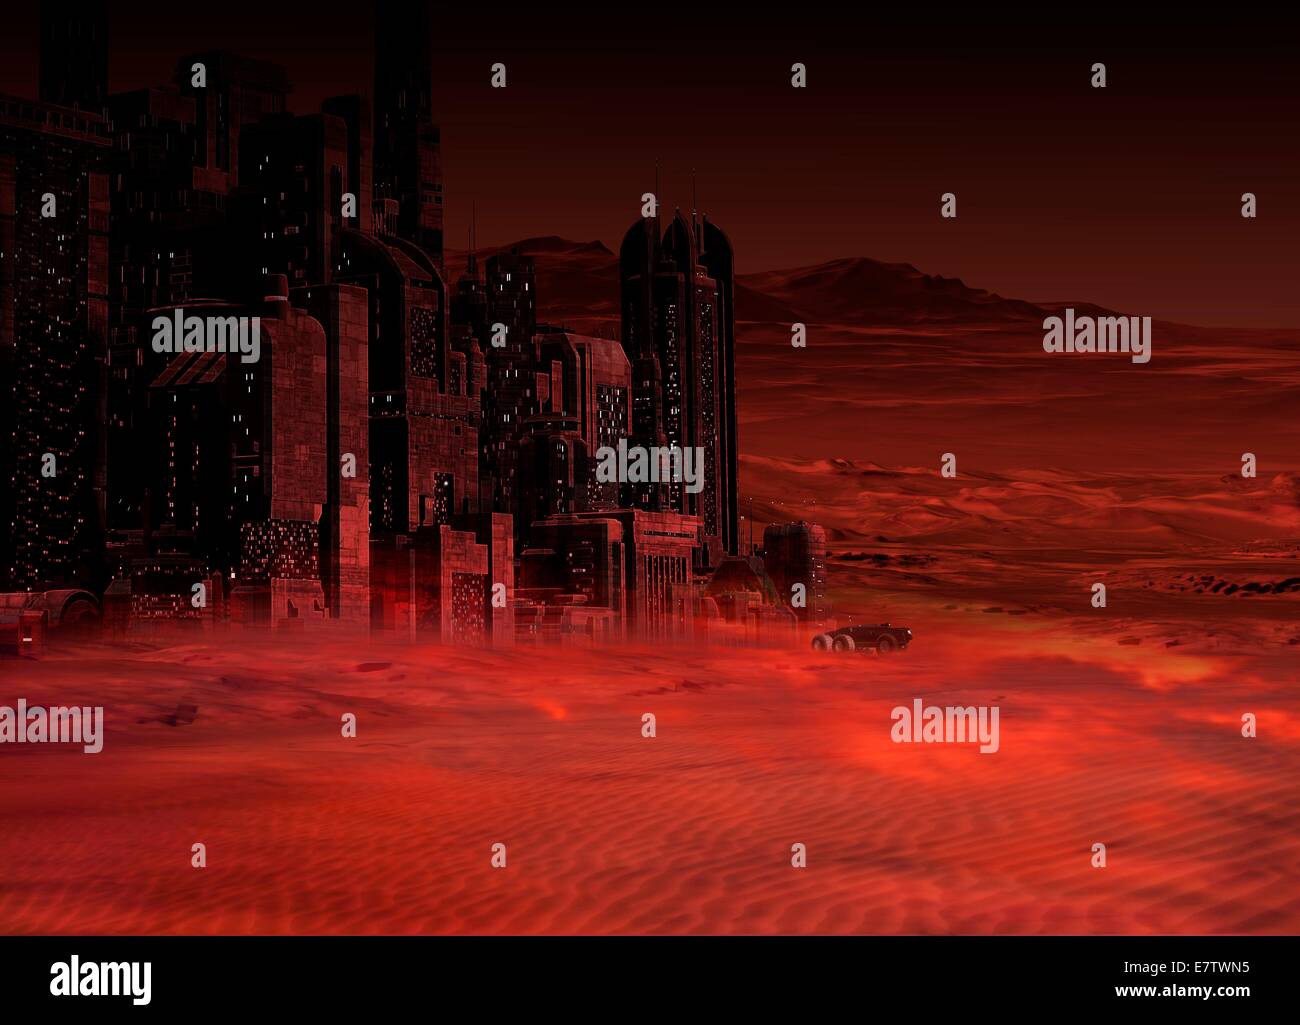 Planet mars in the future, computer artwork. Stock Photo